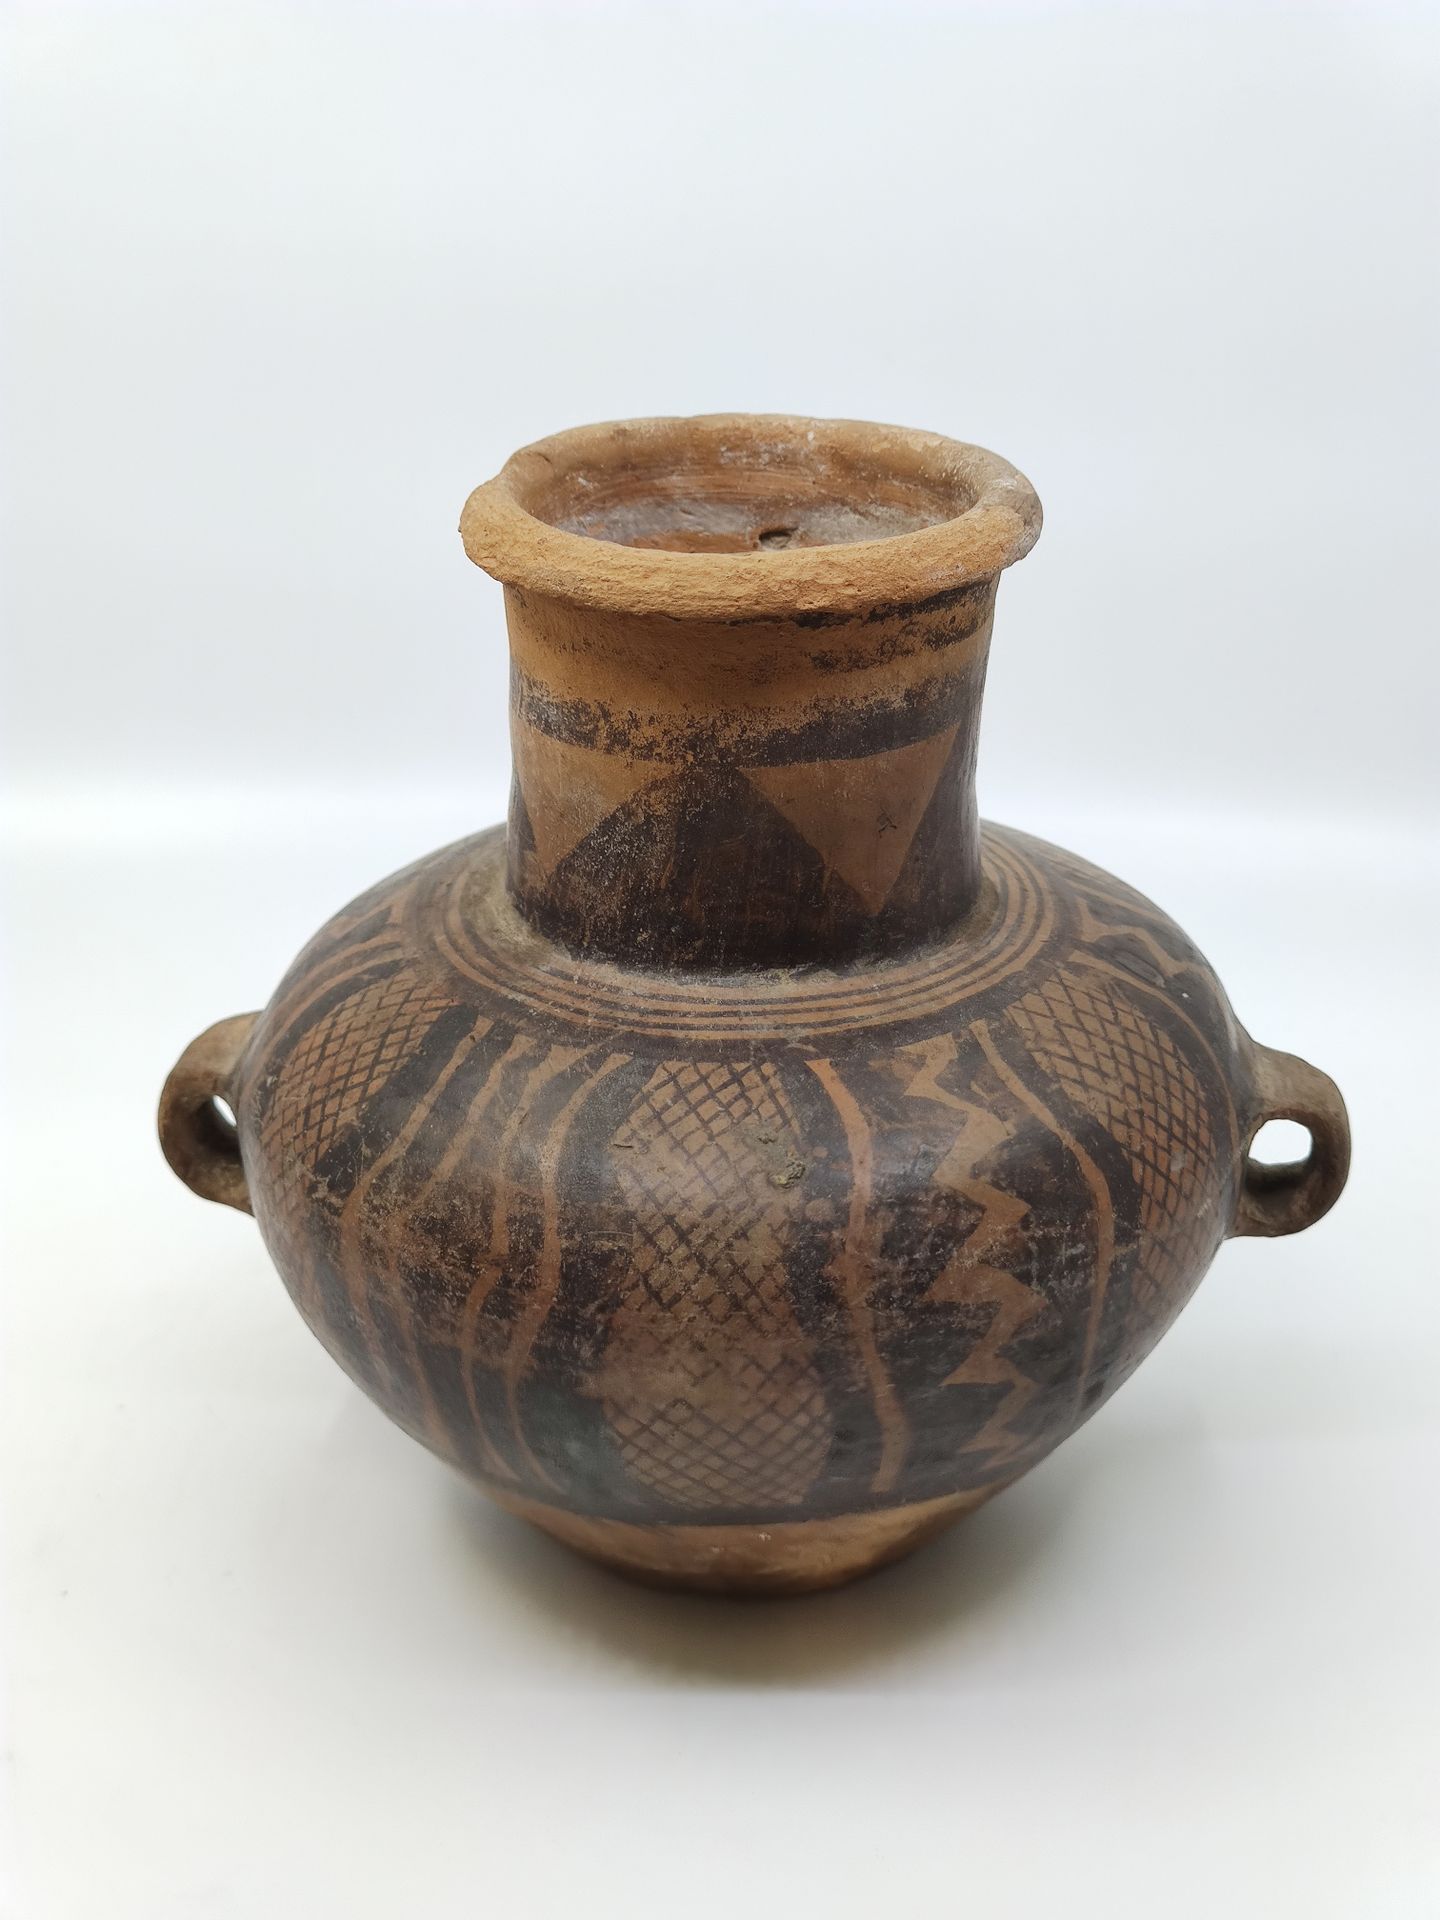 Null 
Vase de BANSHAN 




Culture de MAJIAYAO




Vers 2500 avant notre ère



&hellip;